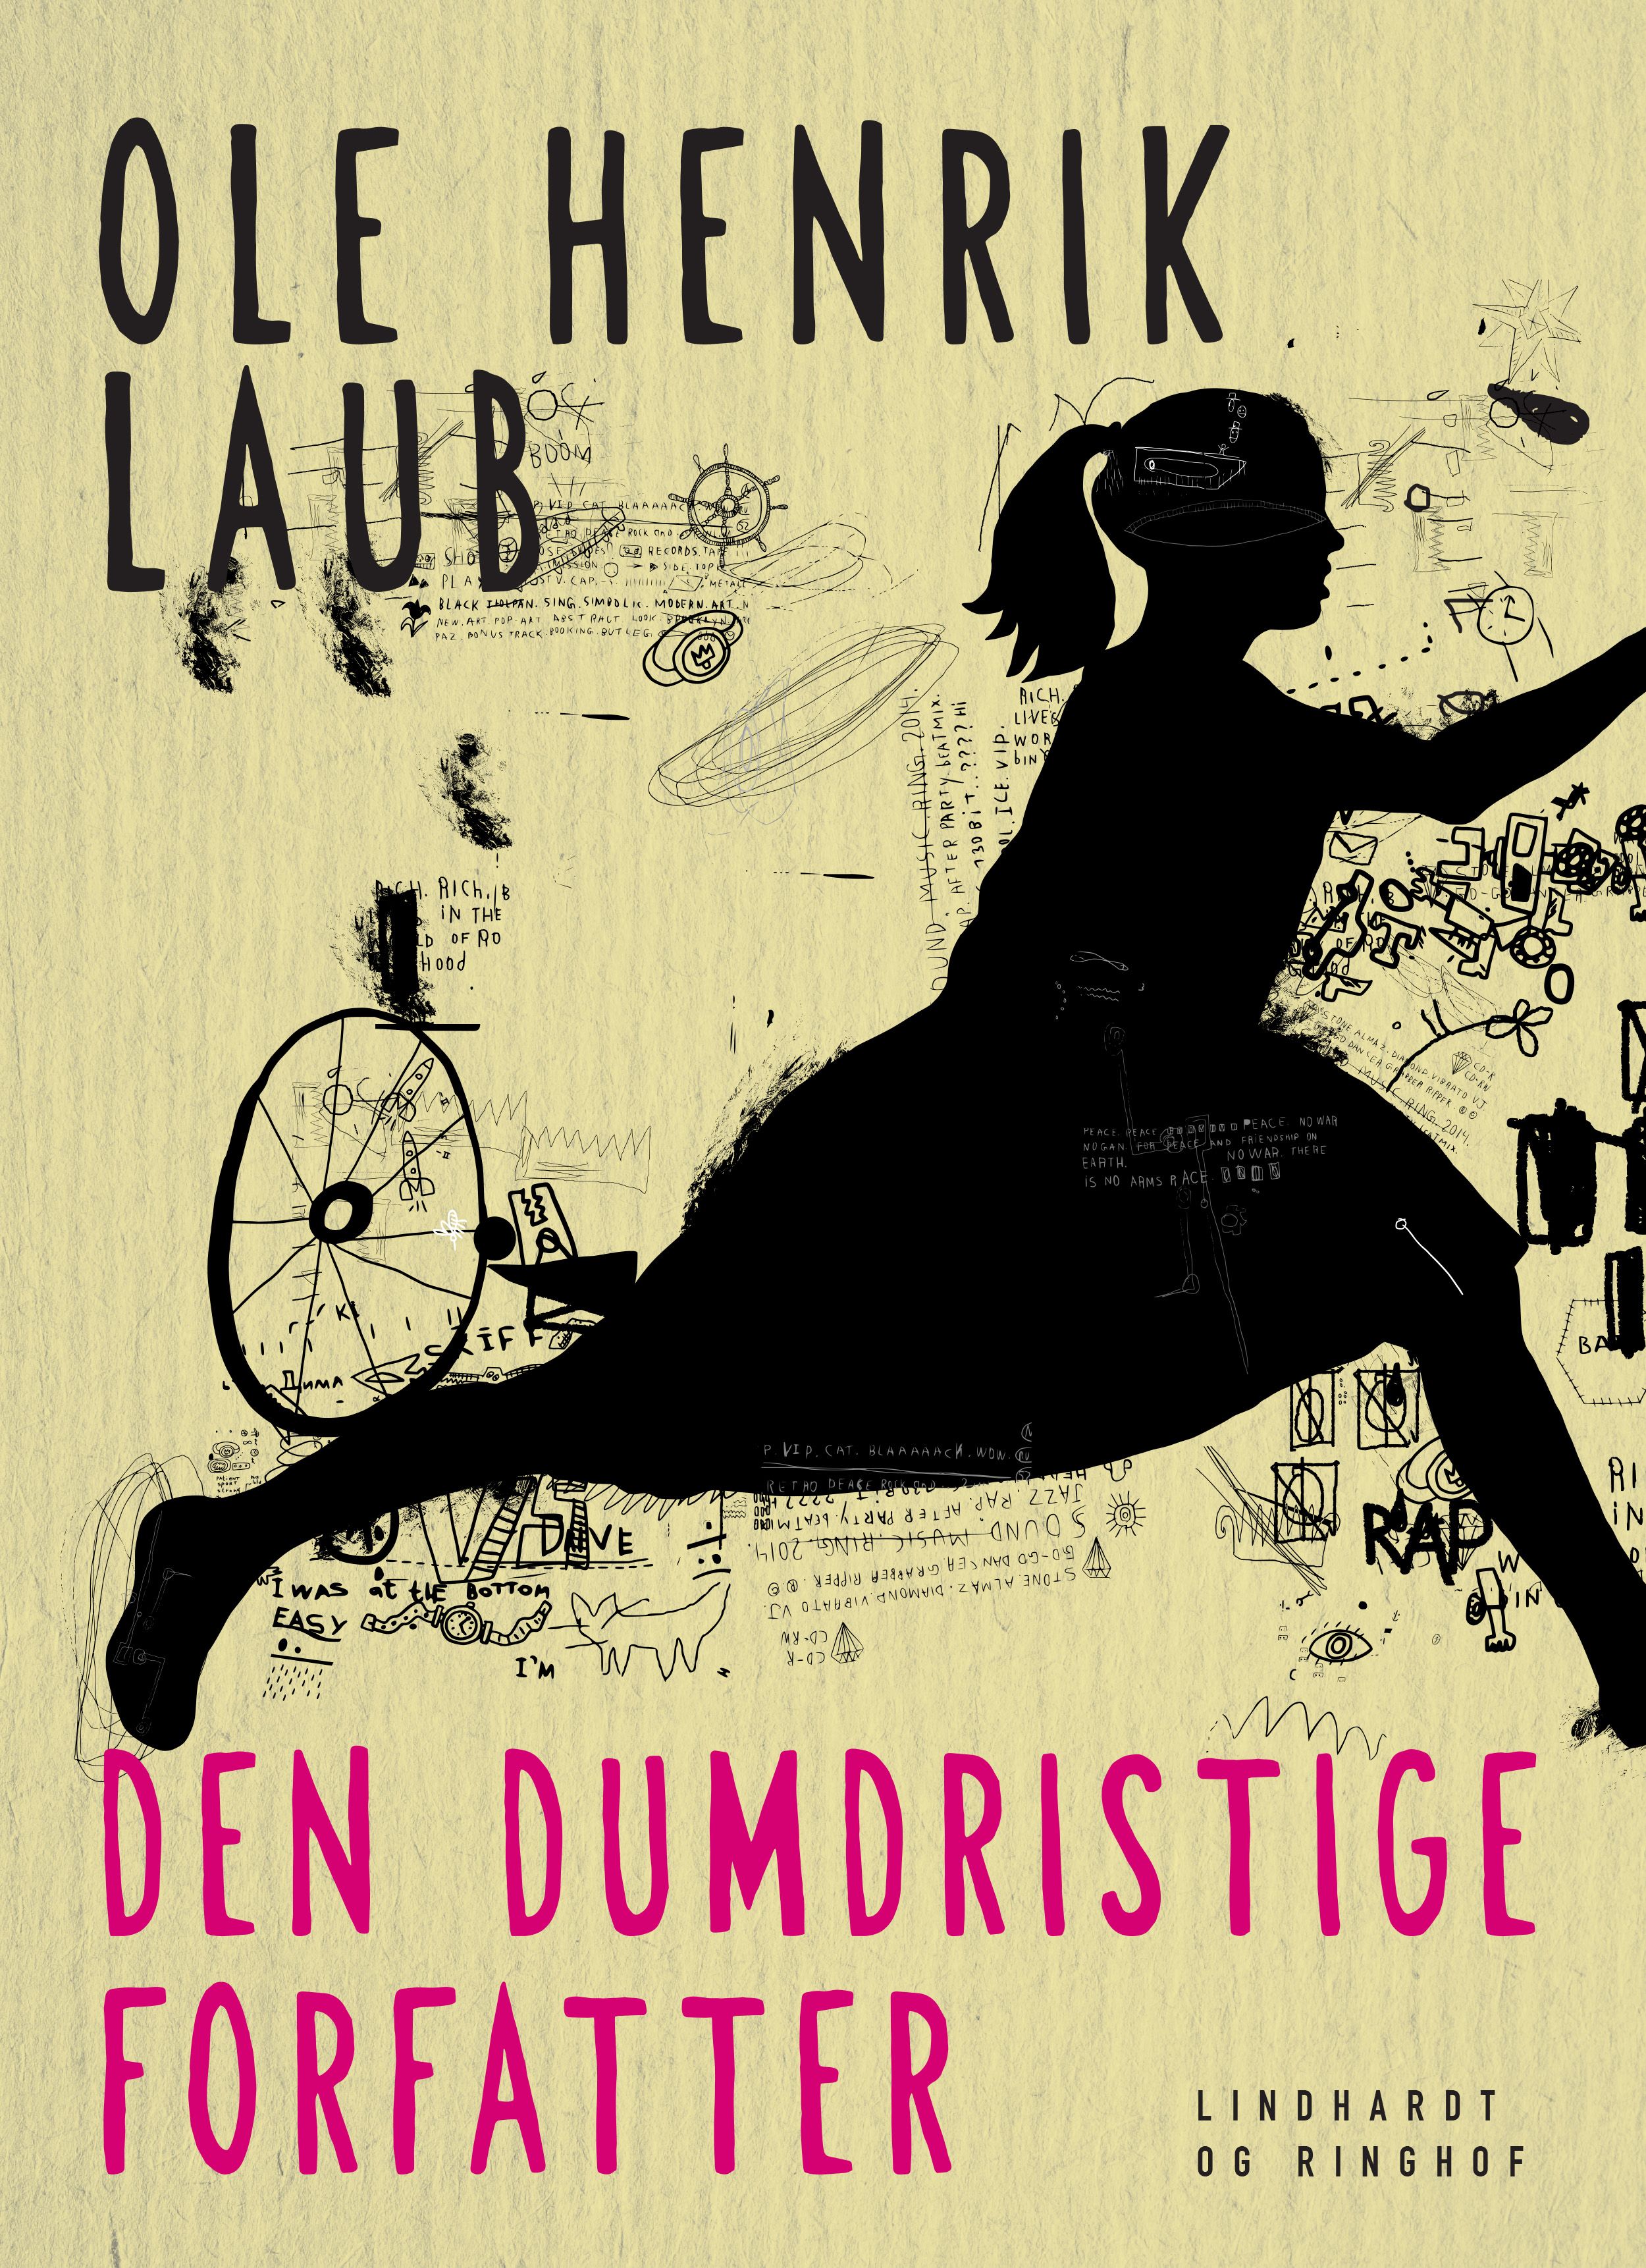 Trofæ: Den dumdristige forfatter, audiobook by Ole Henrik Laub